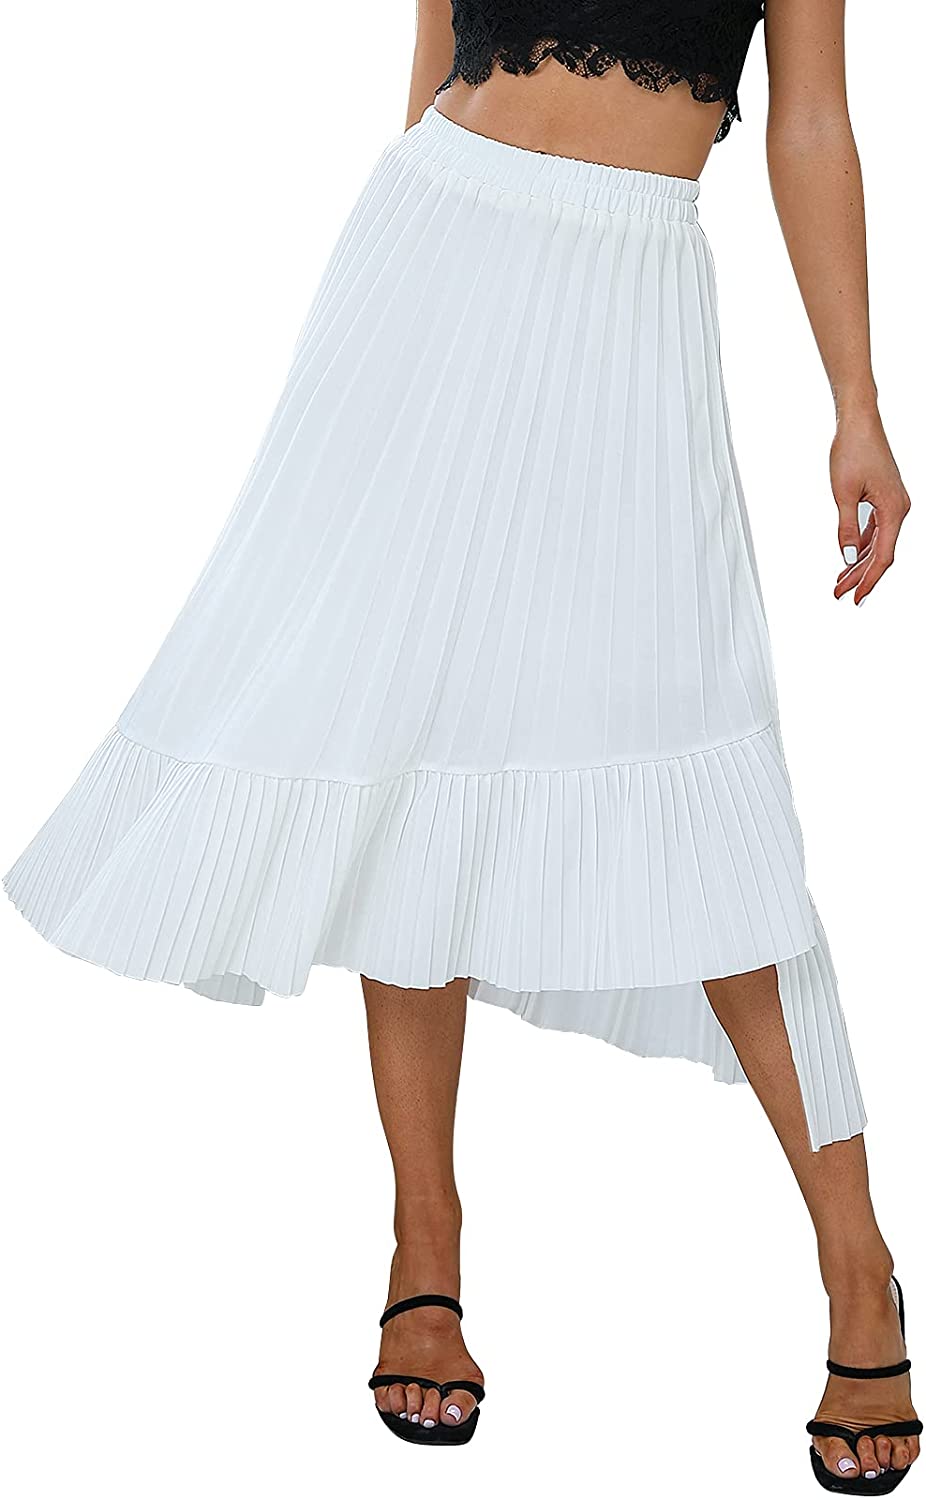 Byinns Women's Stretchy High Waist Ruffle Pleated Asymmetrical A Line Swing Midi Skirts